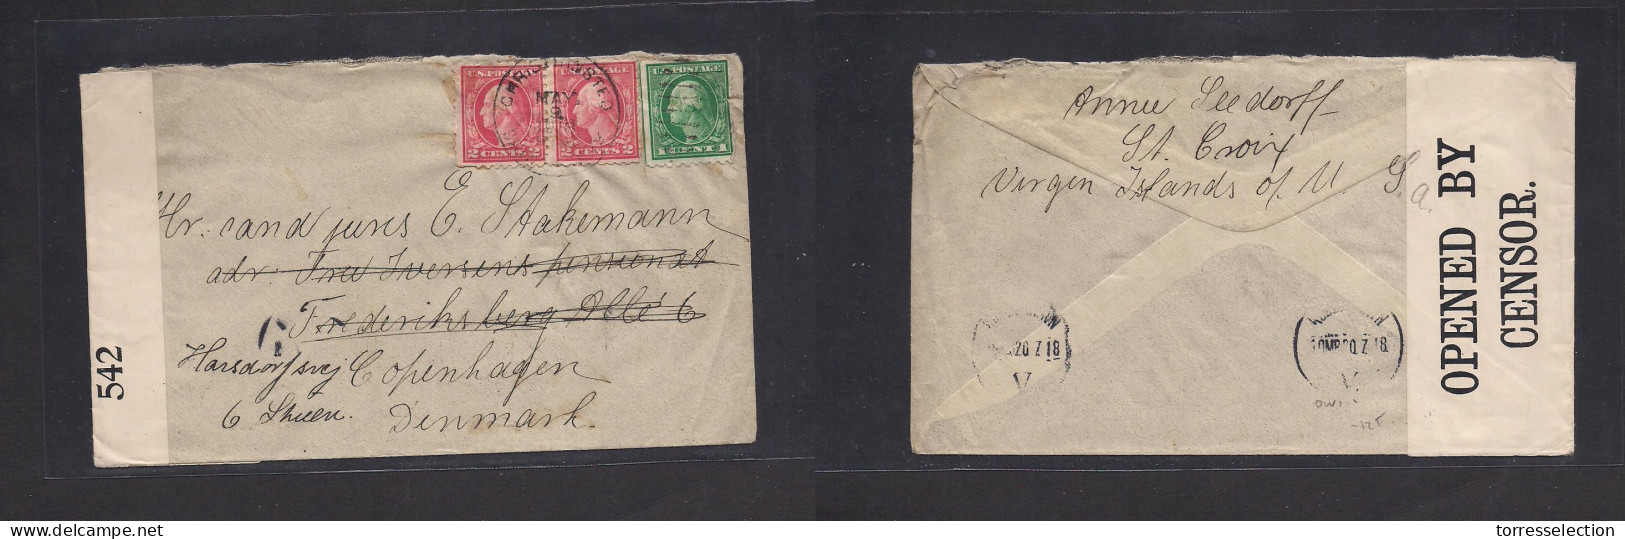 D.W.I.. 1918 (9 May) Christiansted - Denmark (20 July 18) Cph. Multifkd US WWI Censored Envelope. Fine. - Antillen